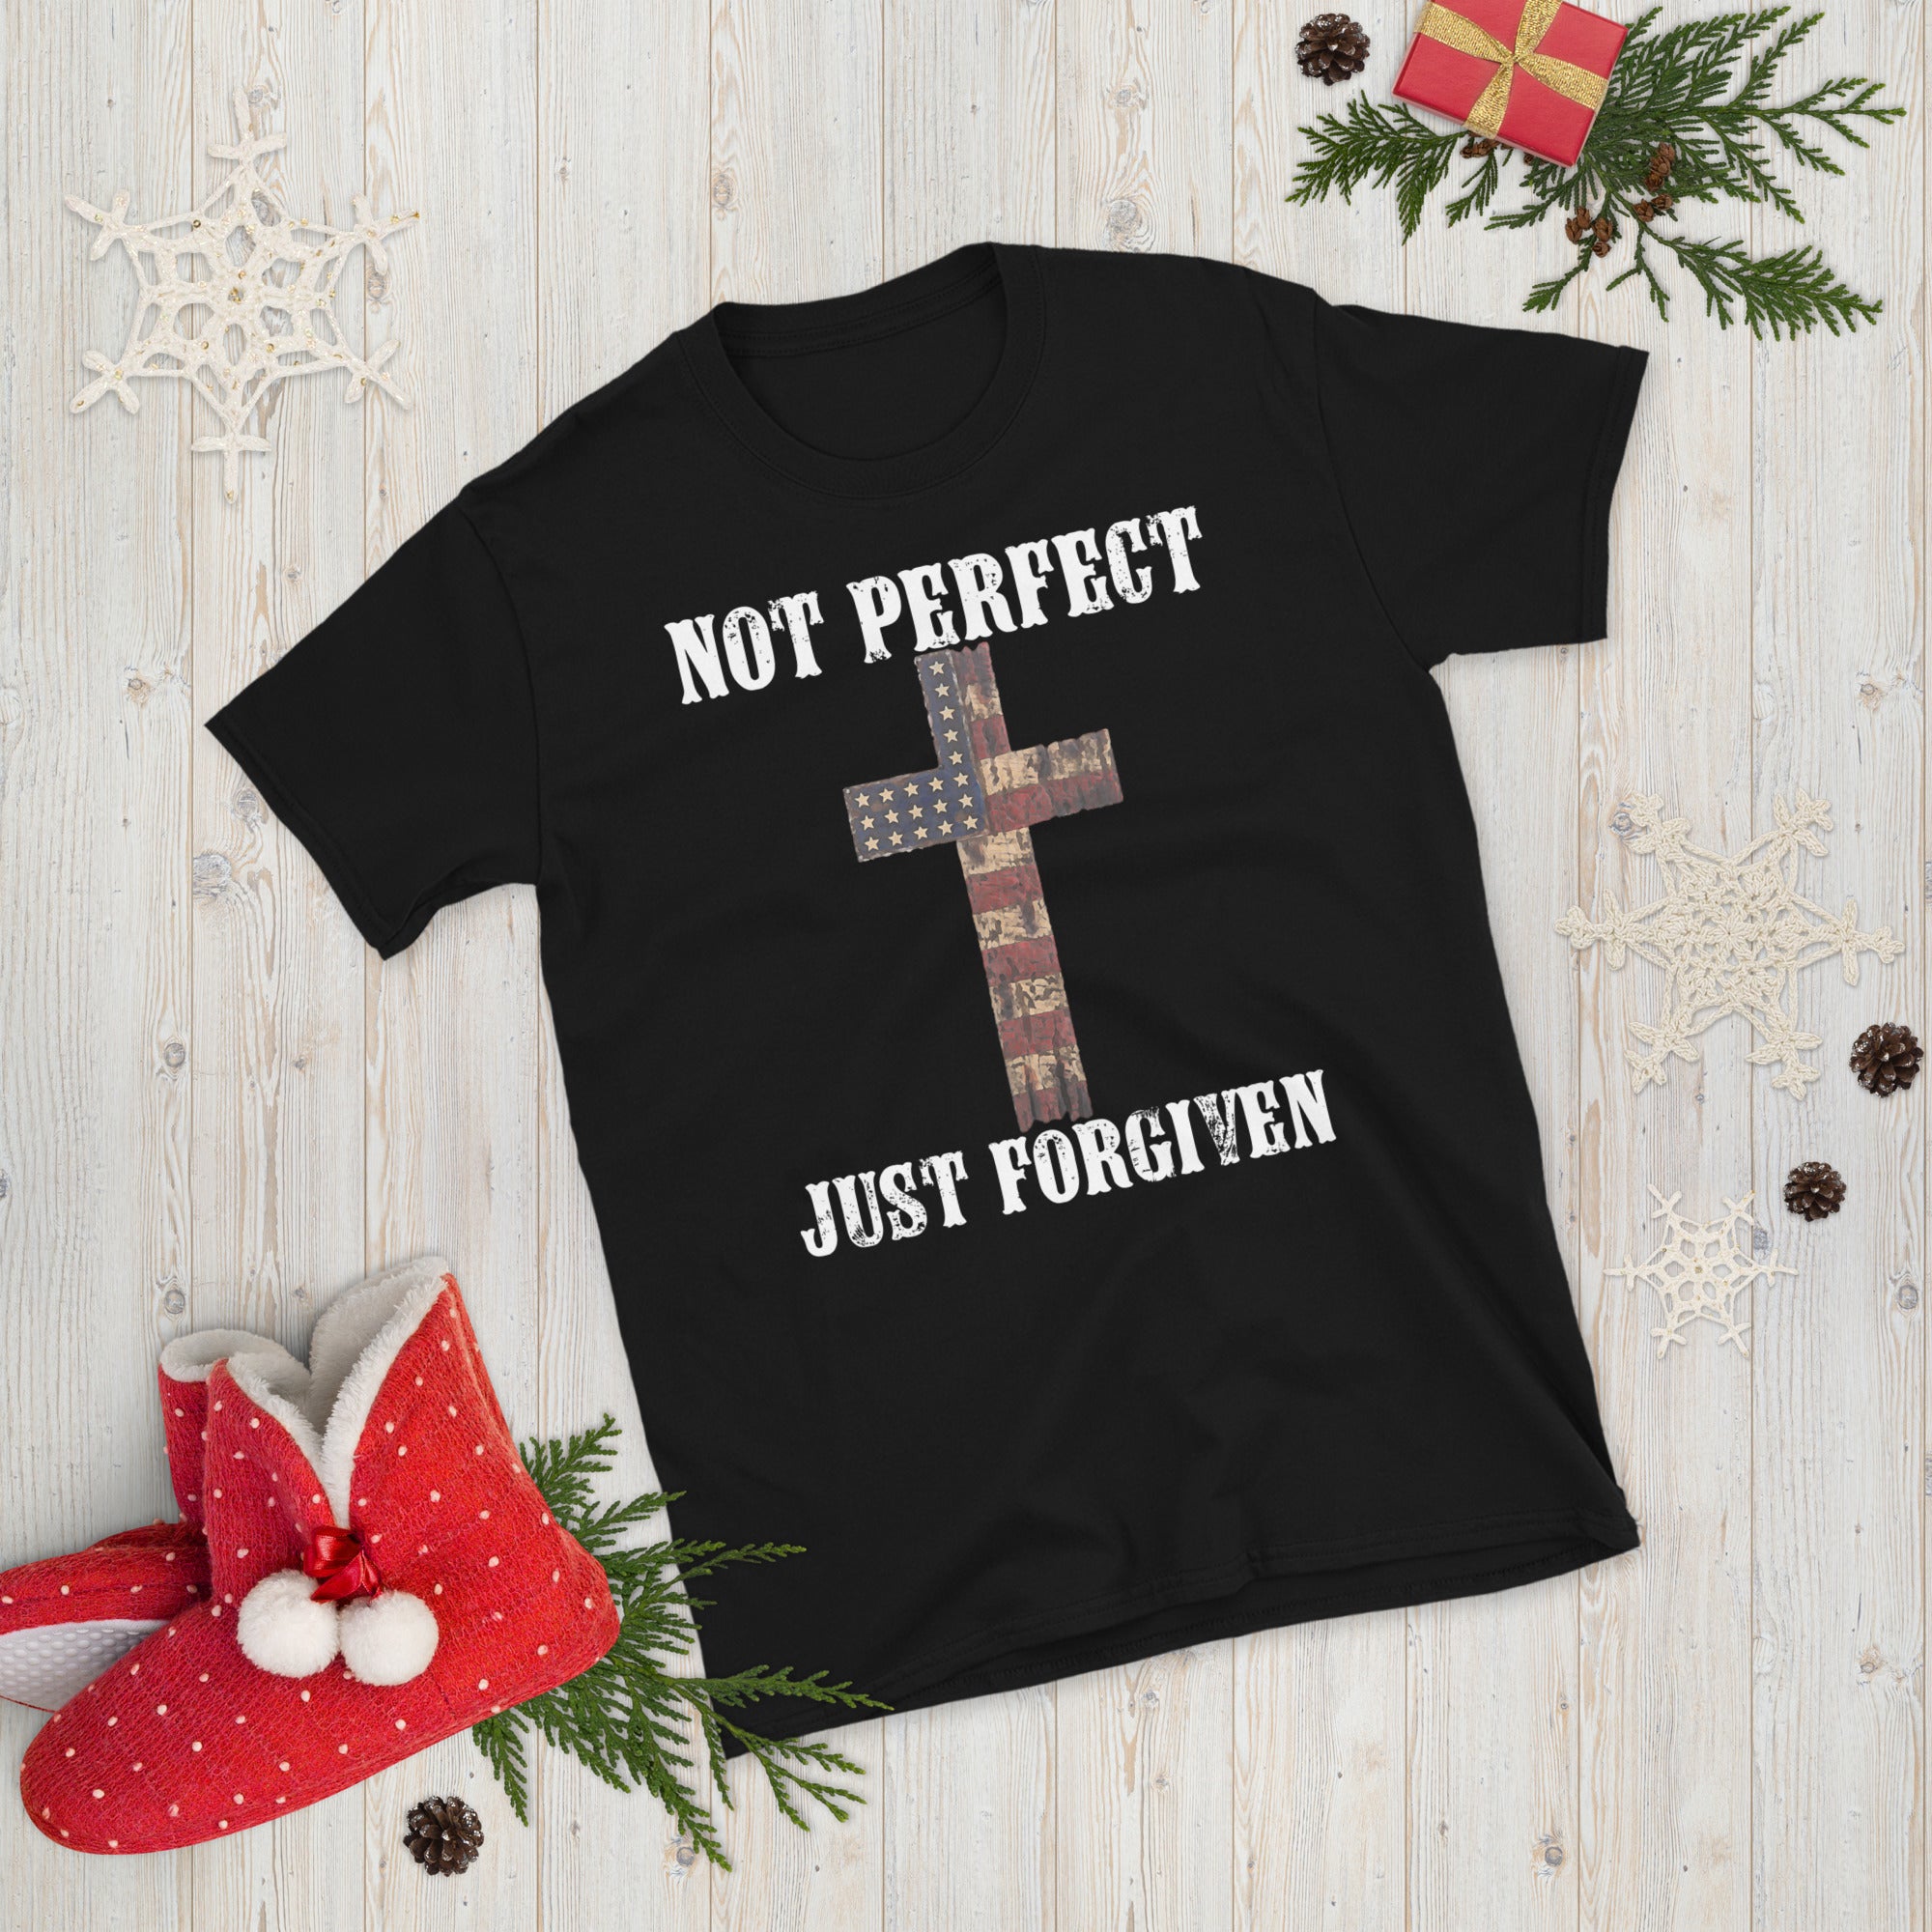 Not Perfect Just Forgiven Shirt, Christian Shirt, Religious Gifts For Women, Bible Verse Tshirt, Religious Gifts, Holy Bible T Shirt - Madeinsea©